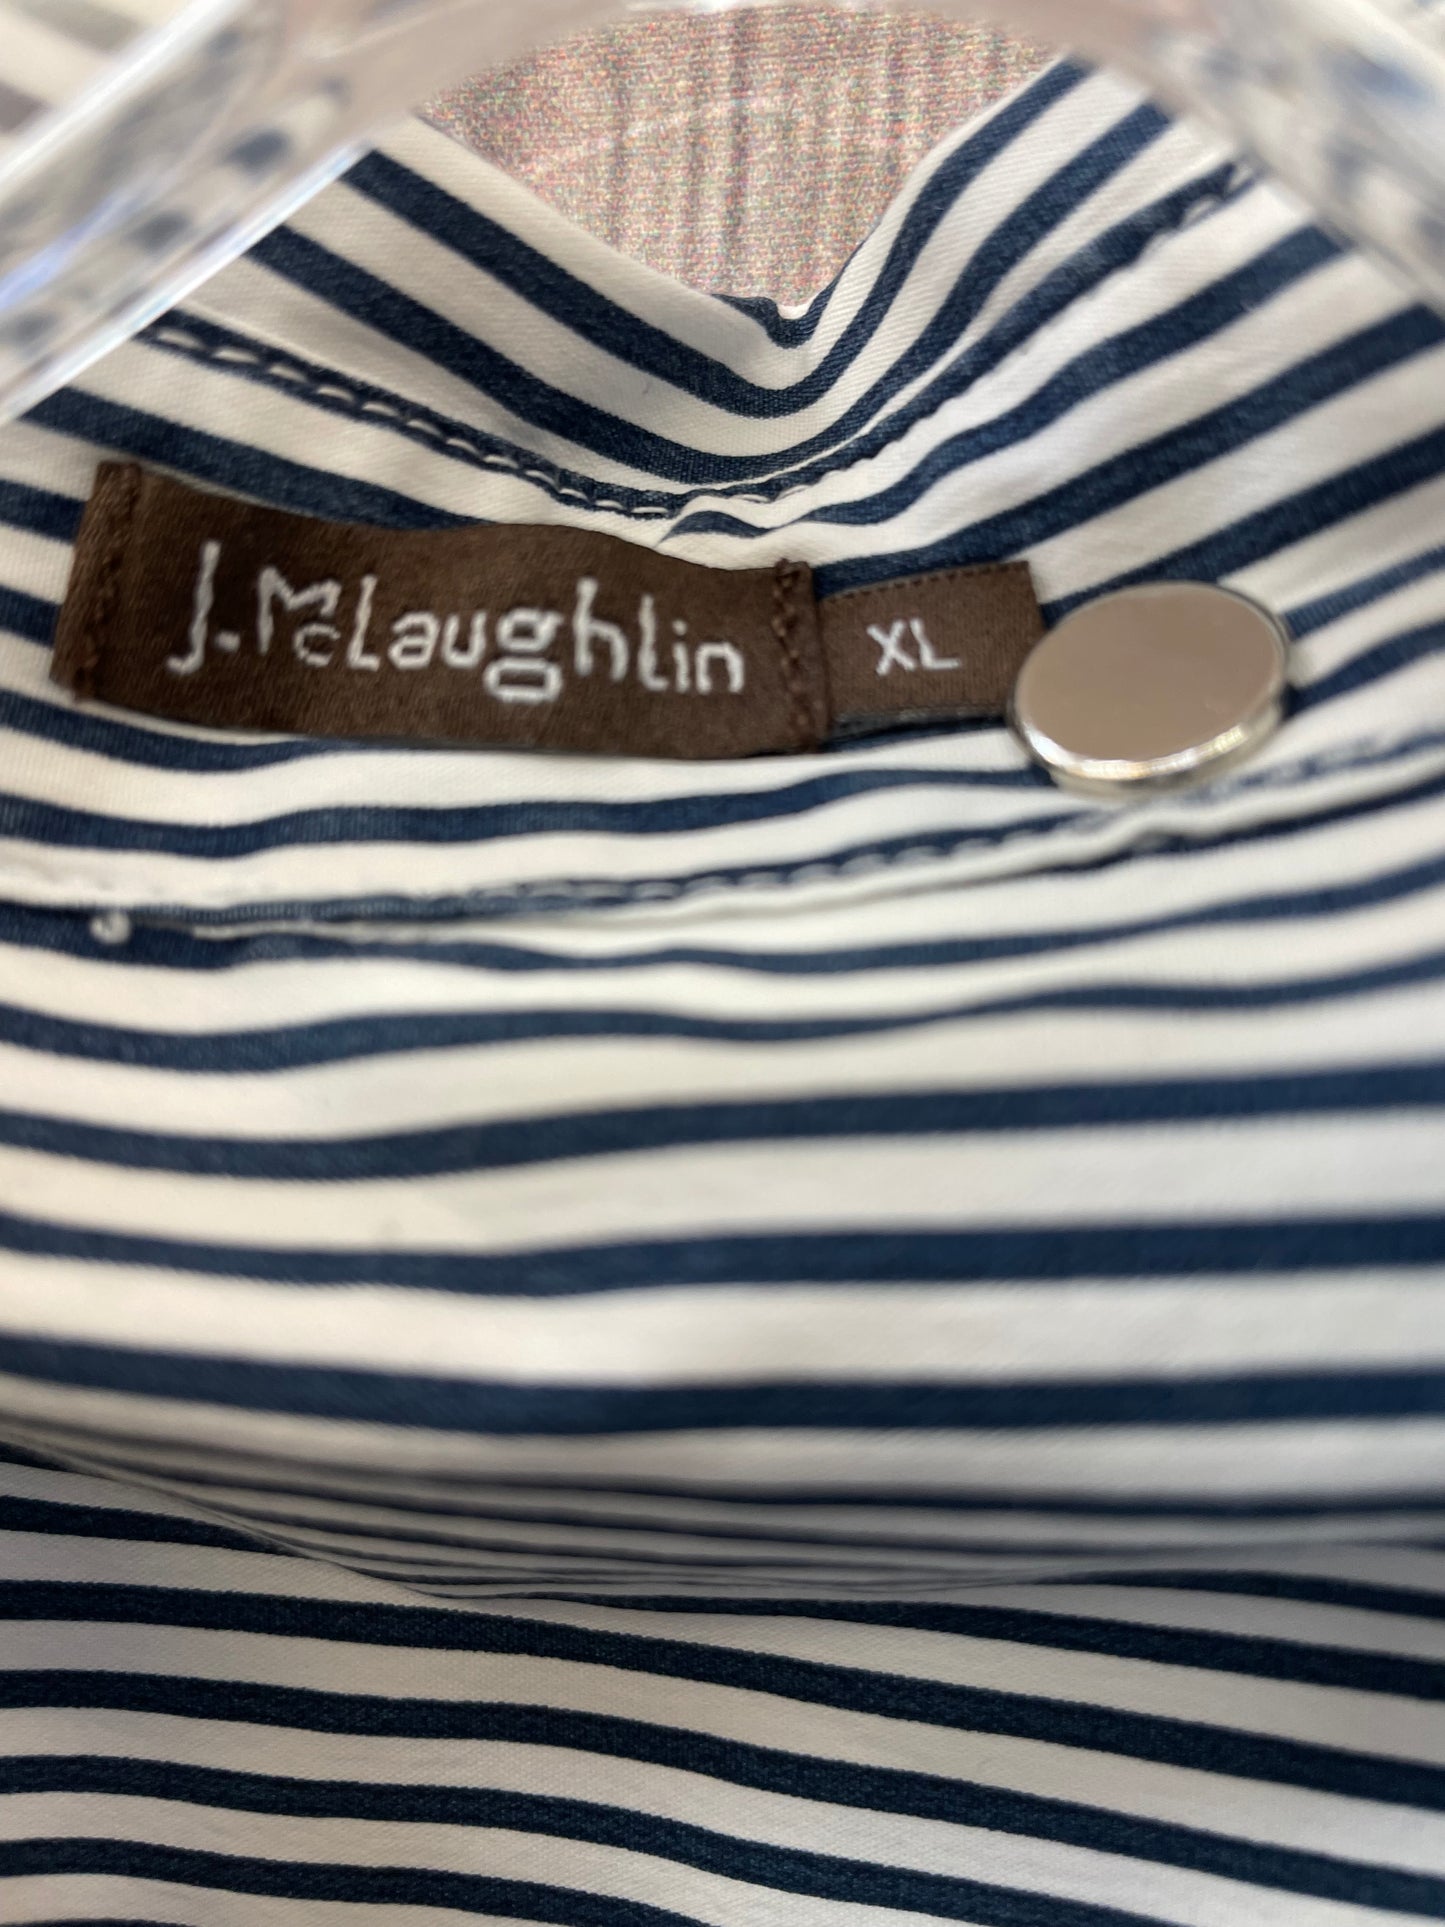 Top Long Sleeve By J Mclaughlin  Size: Xl